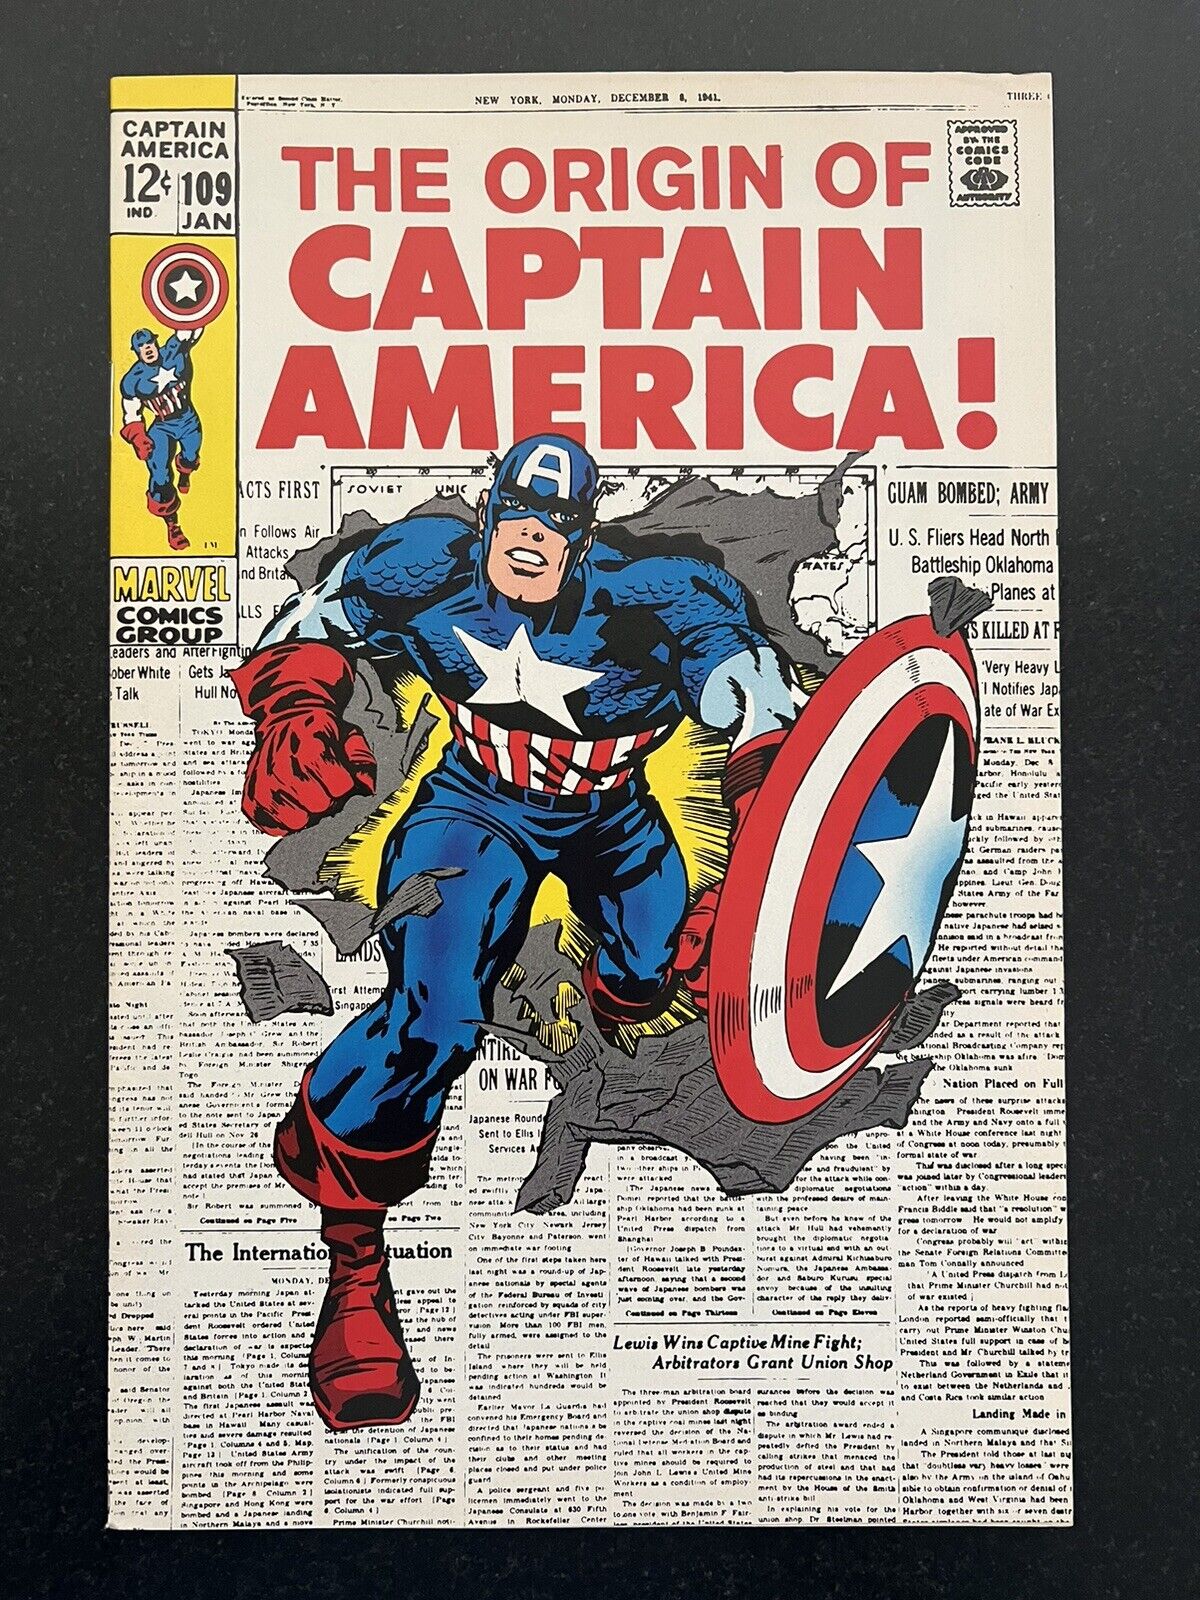 Captain America #109 JC Penney Reprint (1994) - VF+ (8.5) - Origin Retold